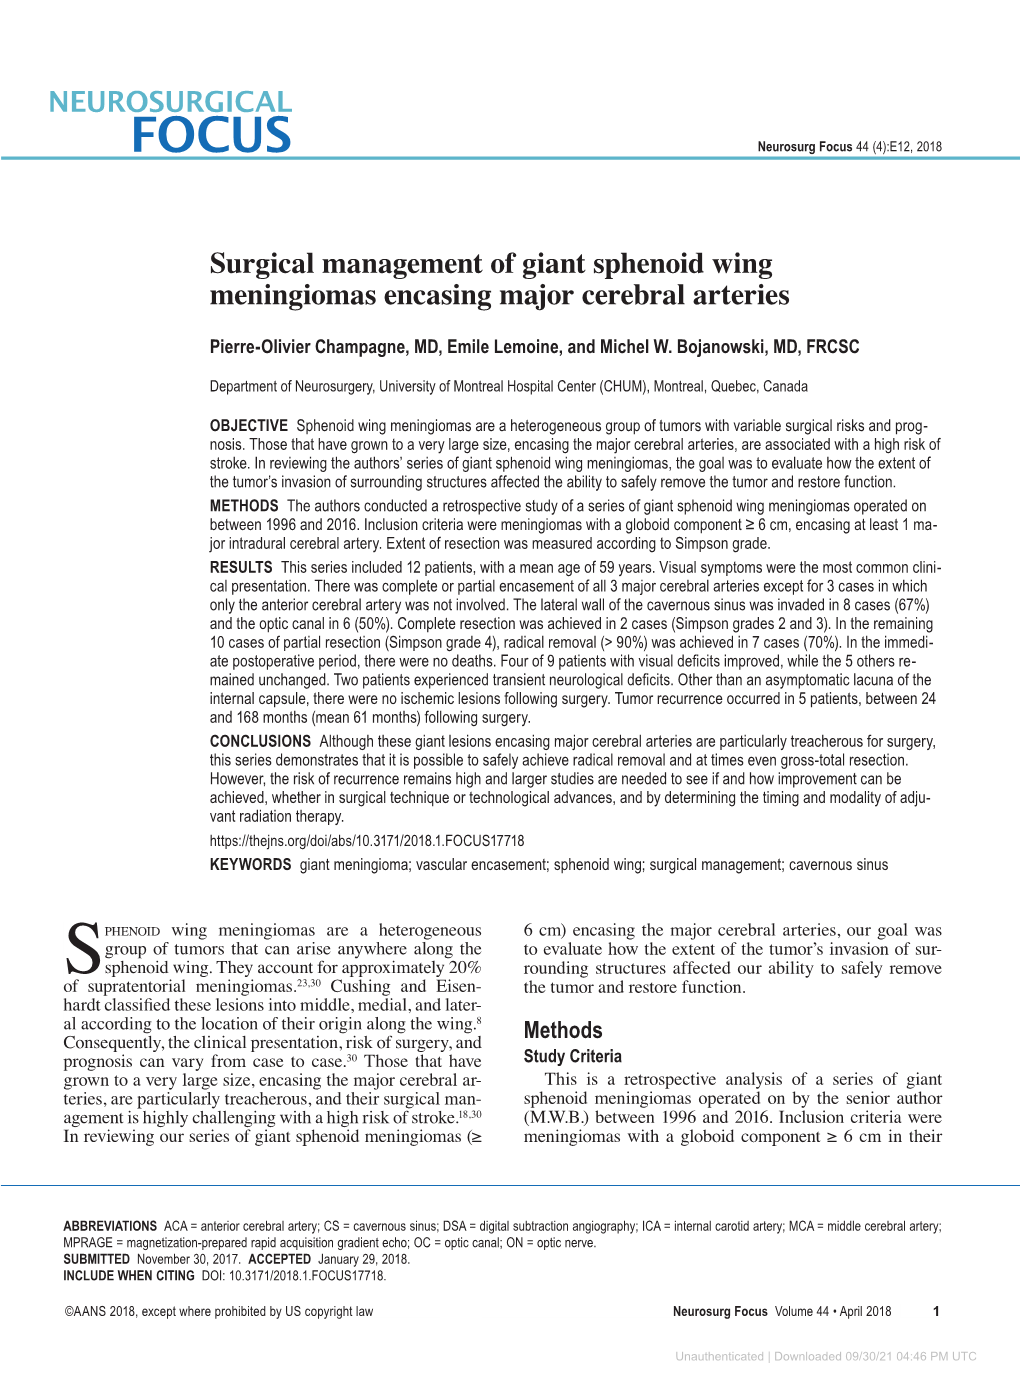 Surgical Management of Giant Sphenoid Wing Meningiomas Encasing Major Cerebral Arteries